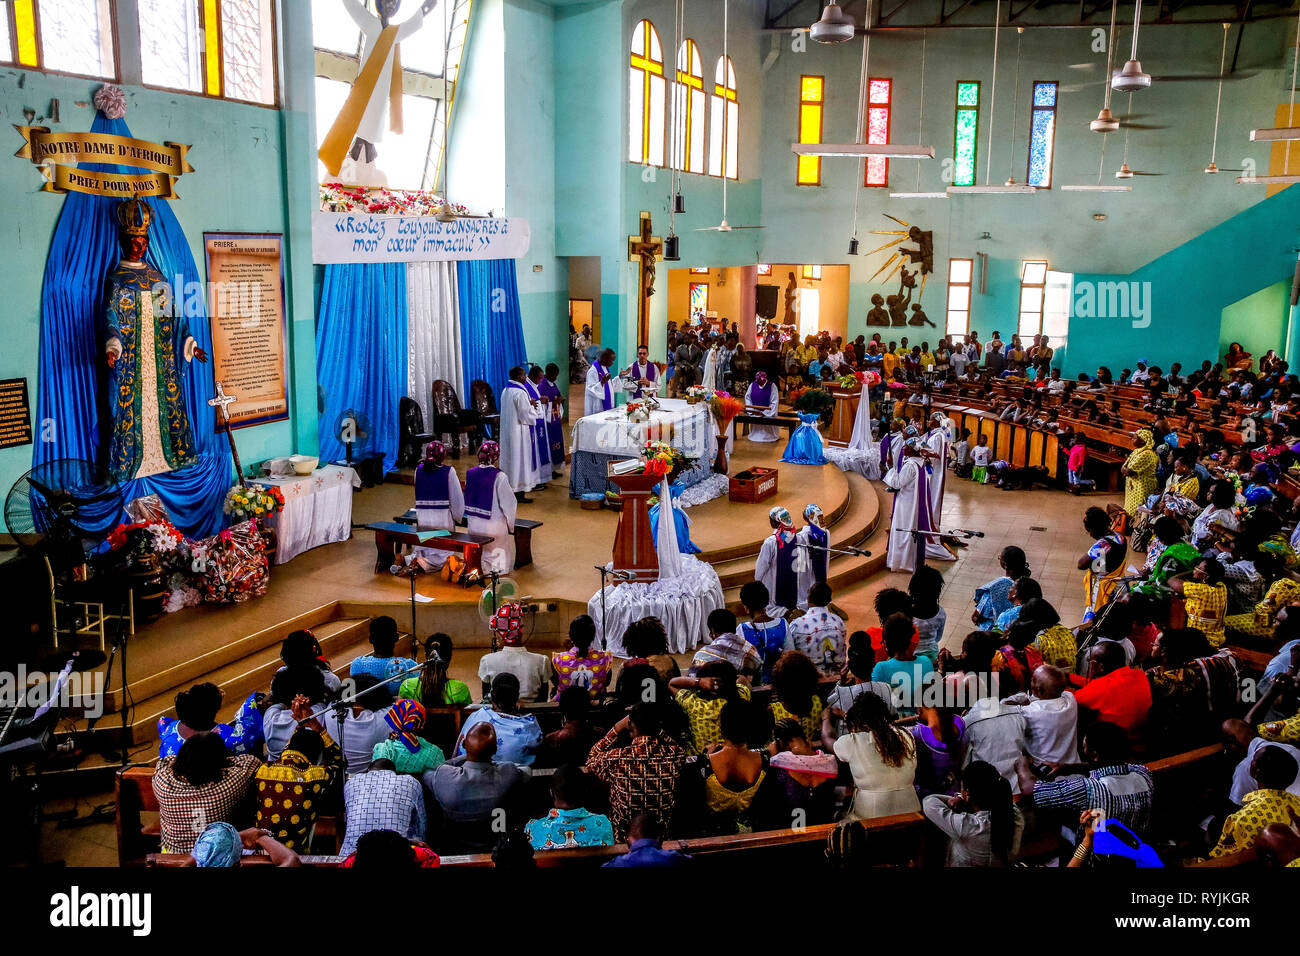 Sunday mass in a catholic church in Ouagadougou, Burkina faso. Stock Photo